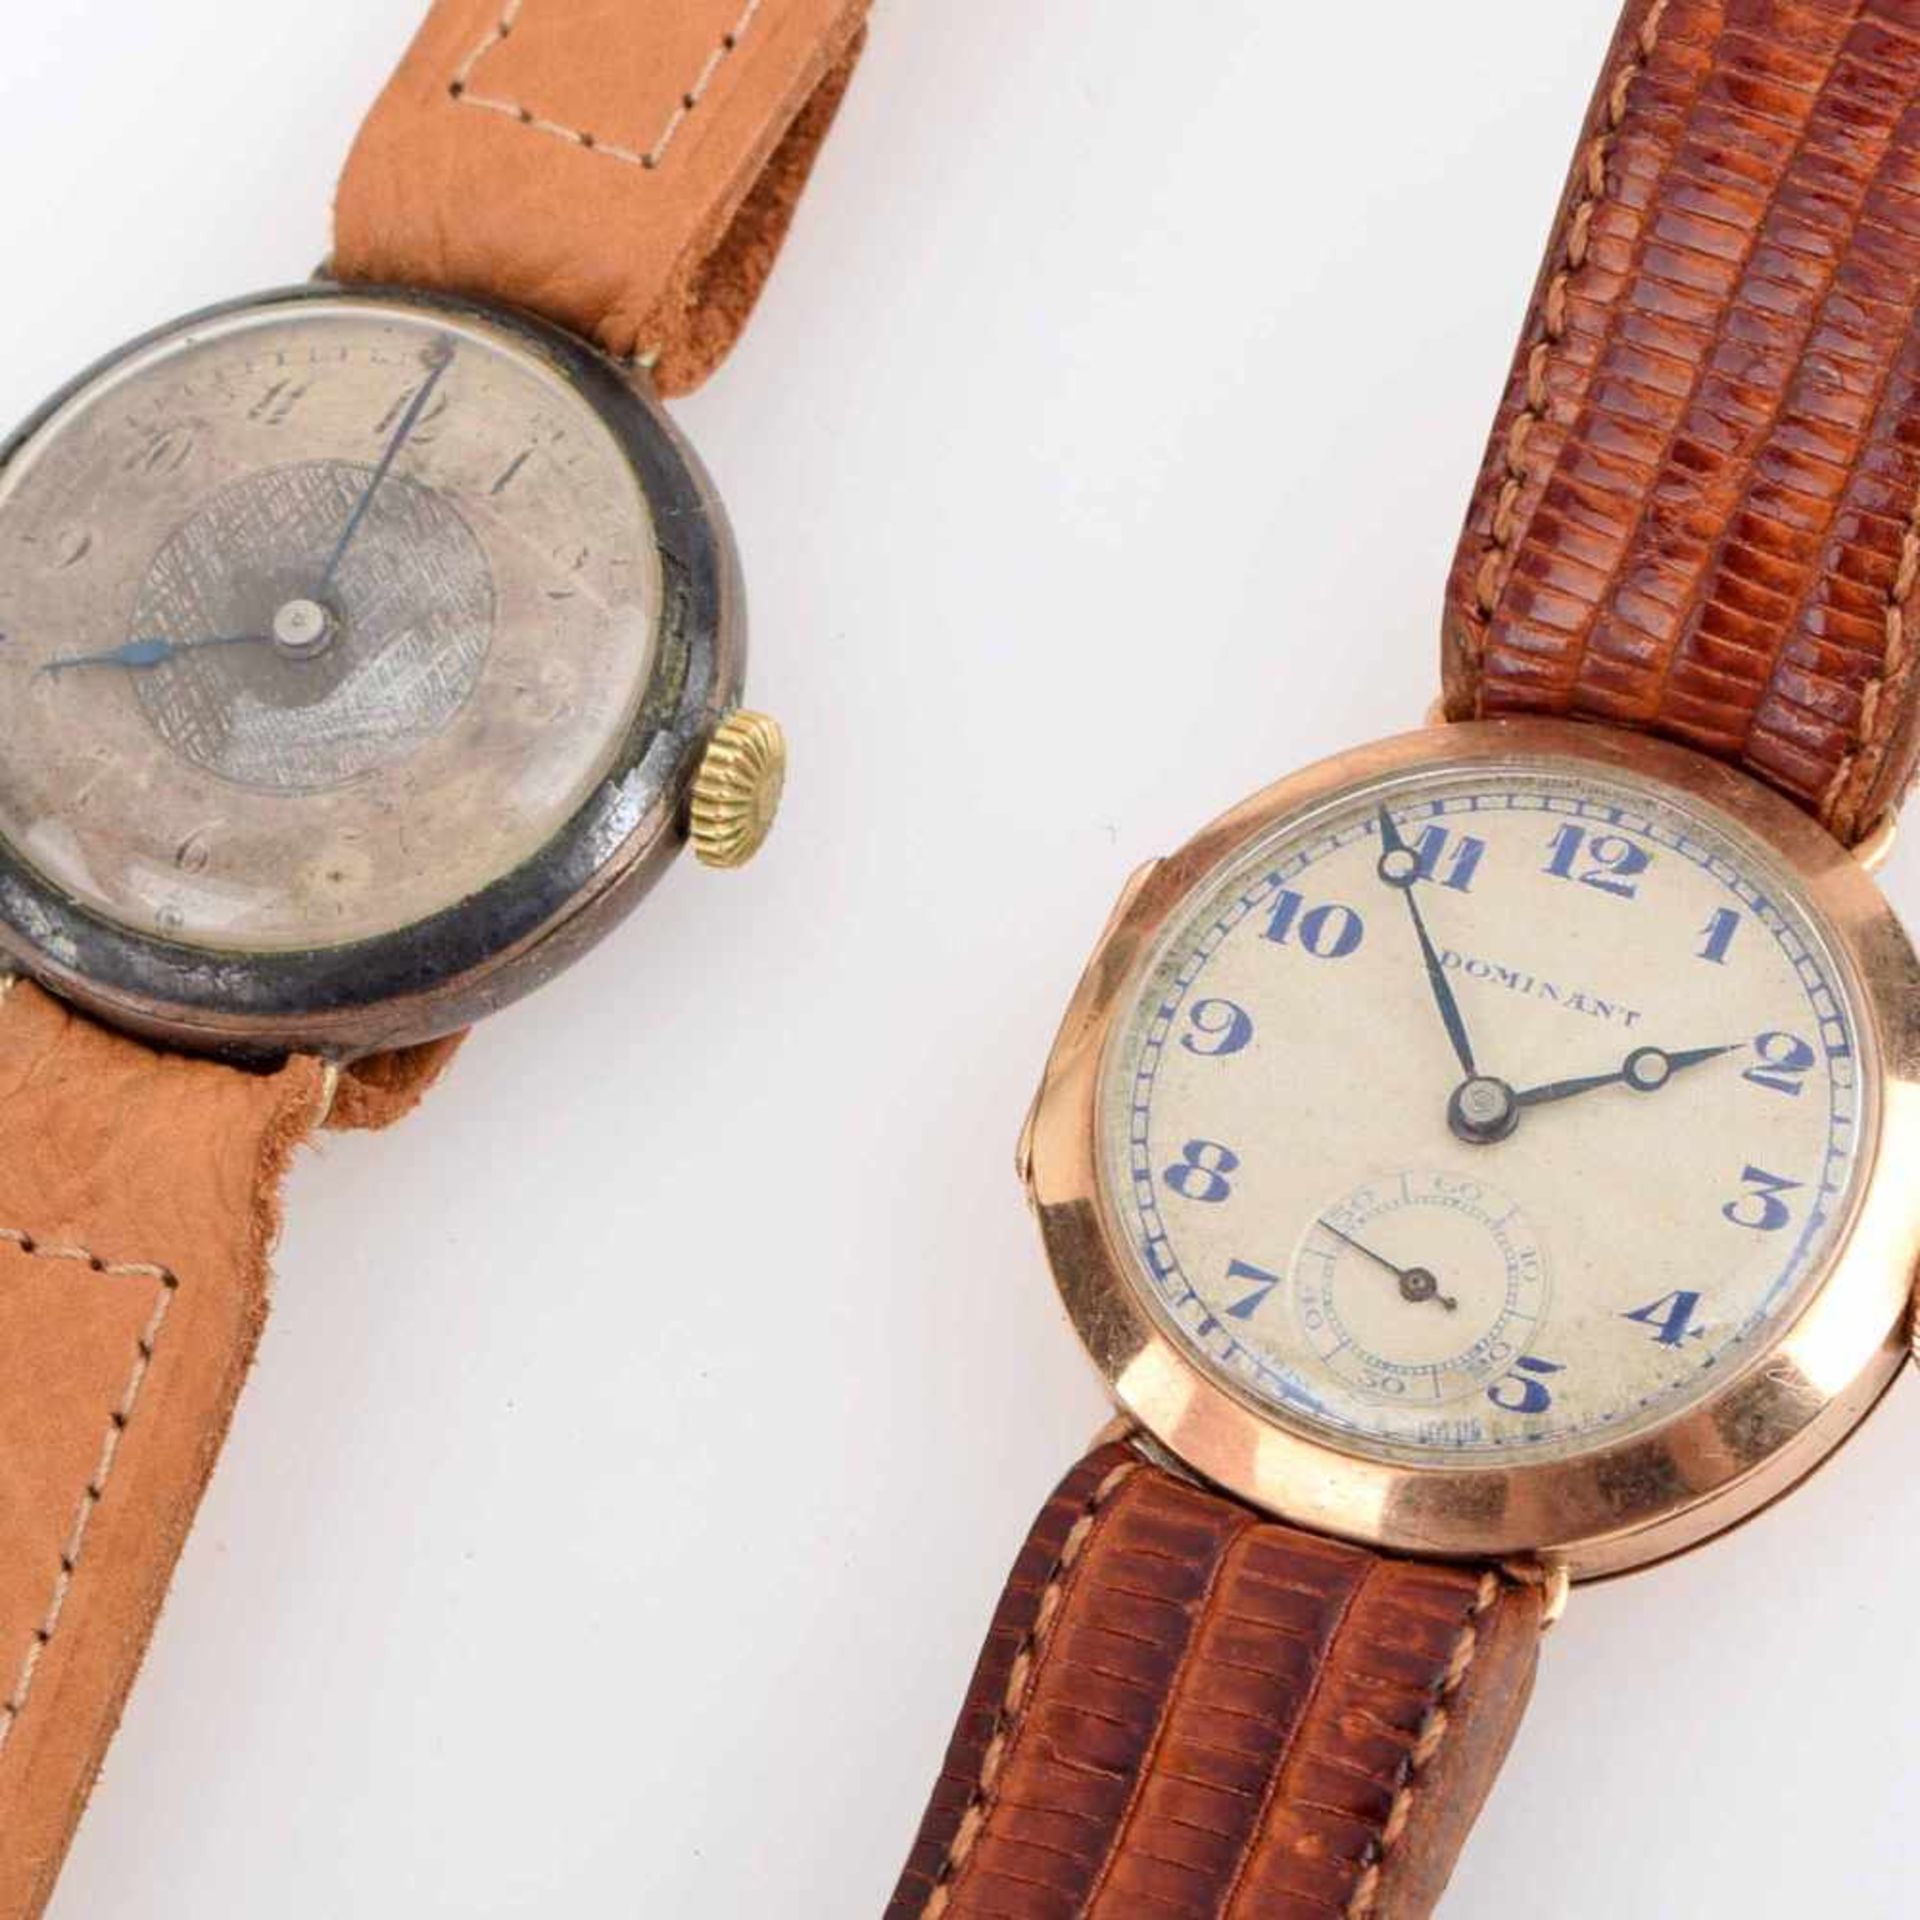 Zwei Armbanduhren 1 x Gehäuse RG 375, Handaufzug (ungeprüft), helles Zifferblatt bez. "Dominant",